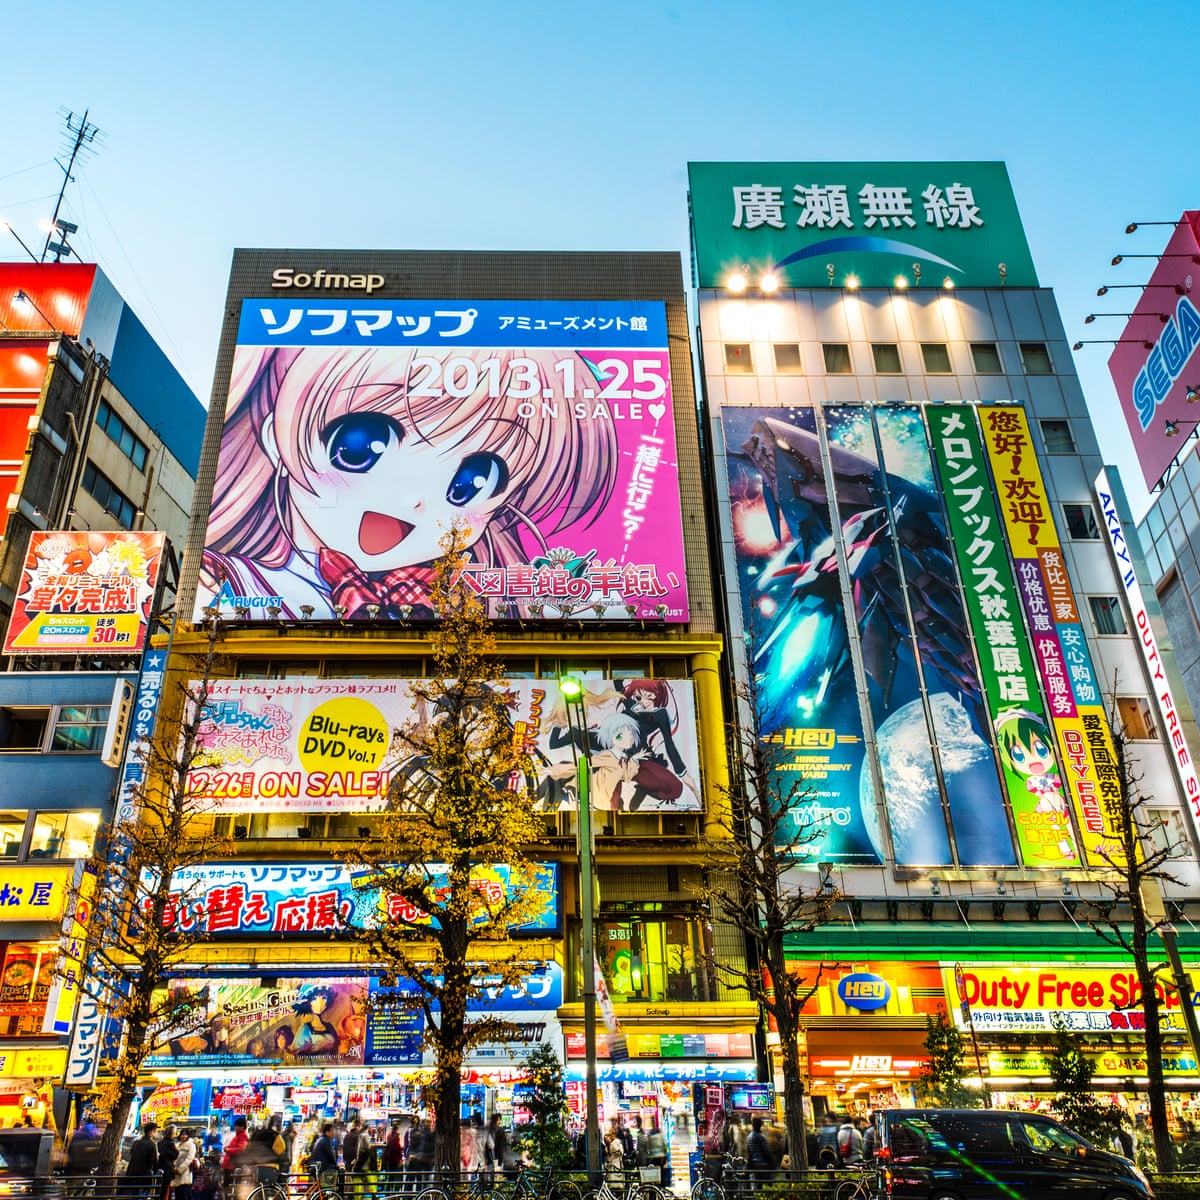 Japan urged to ban manga child abuse images | Japan | The Guardian